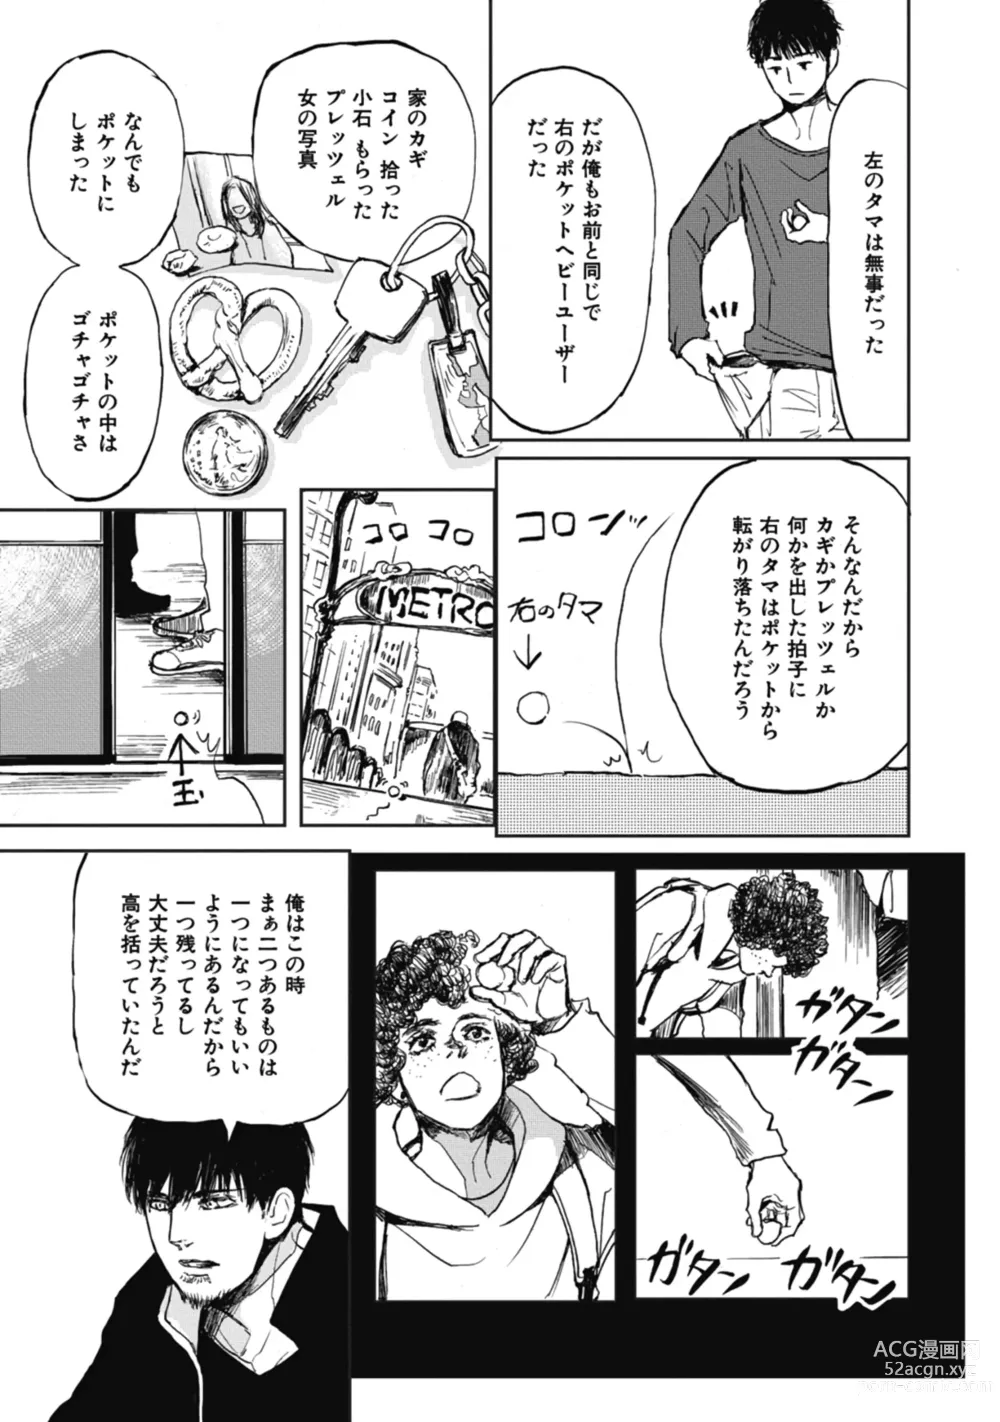 Page 153 of manga Papas Assassin. ~Futari Shite Tonde Yuku.~